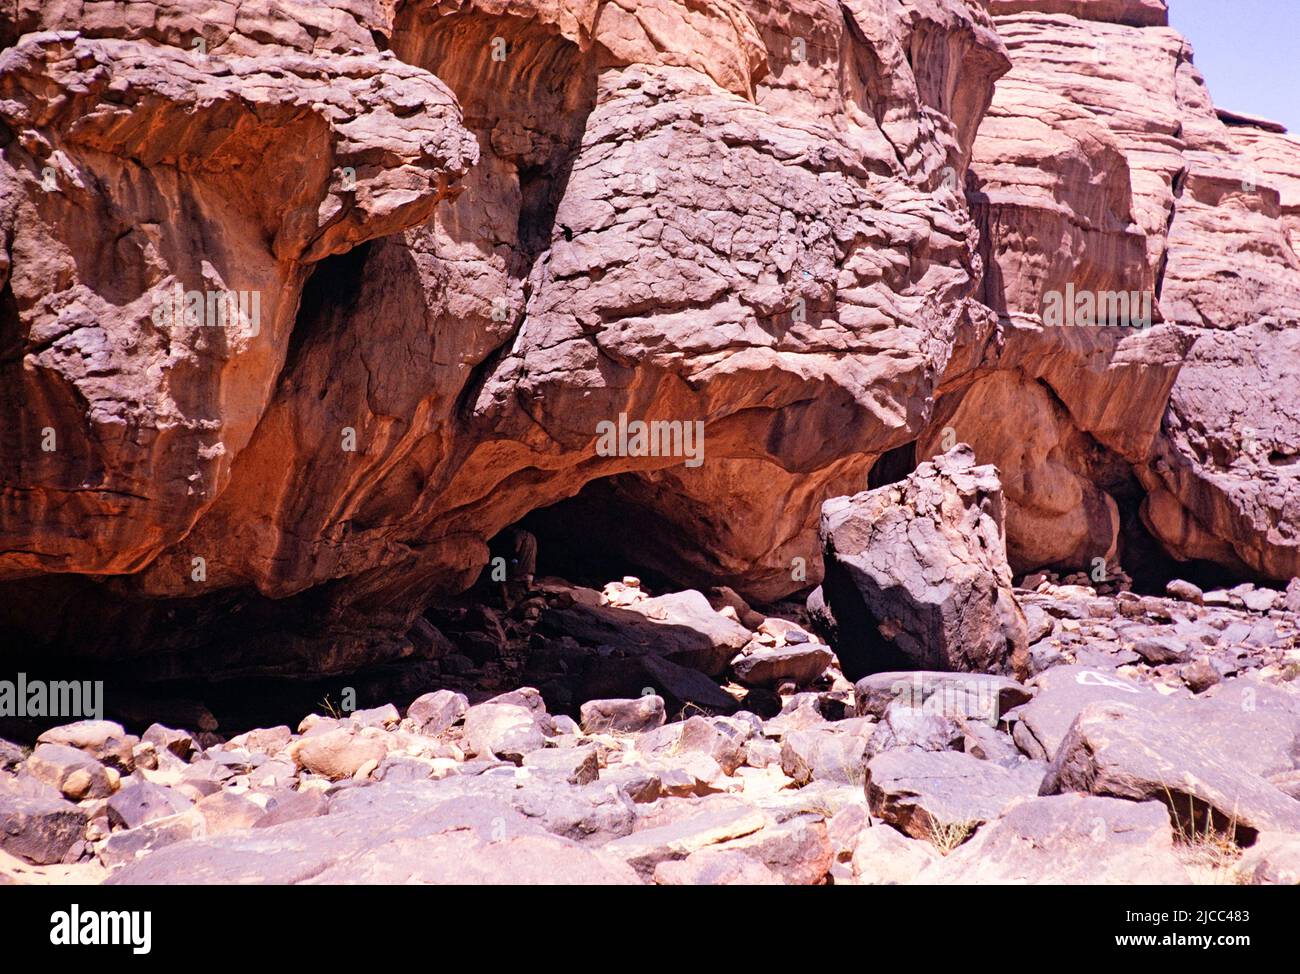 Prehistoric cave dwelling entrance, Tassili plateau, Algeria, North Africa 1973 Tassili N'Ajjer National Park Stock Photo